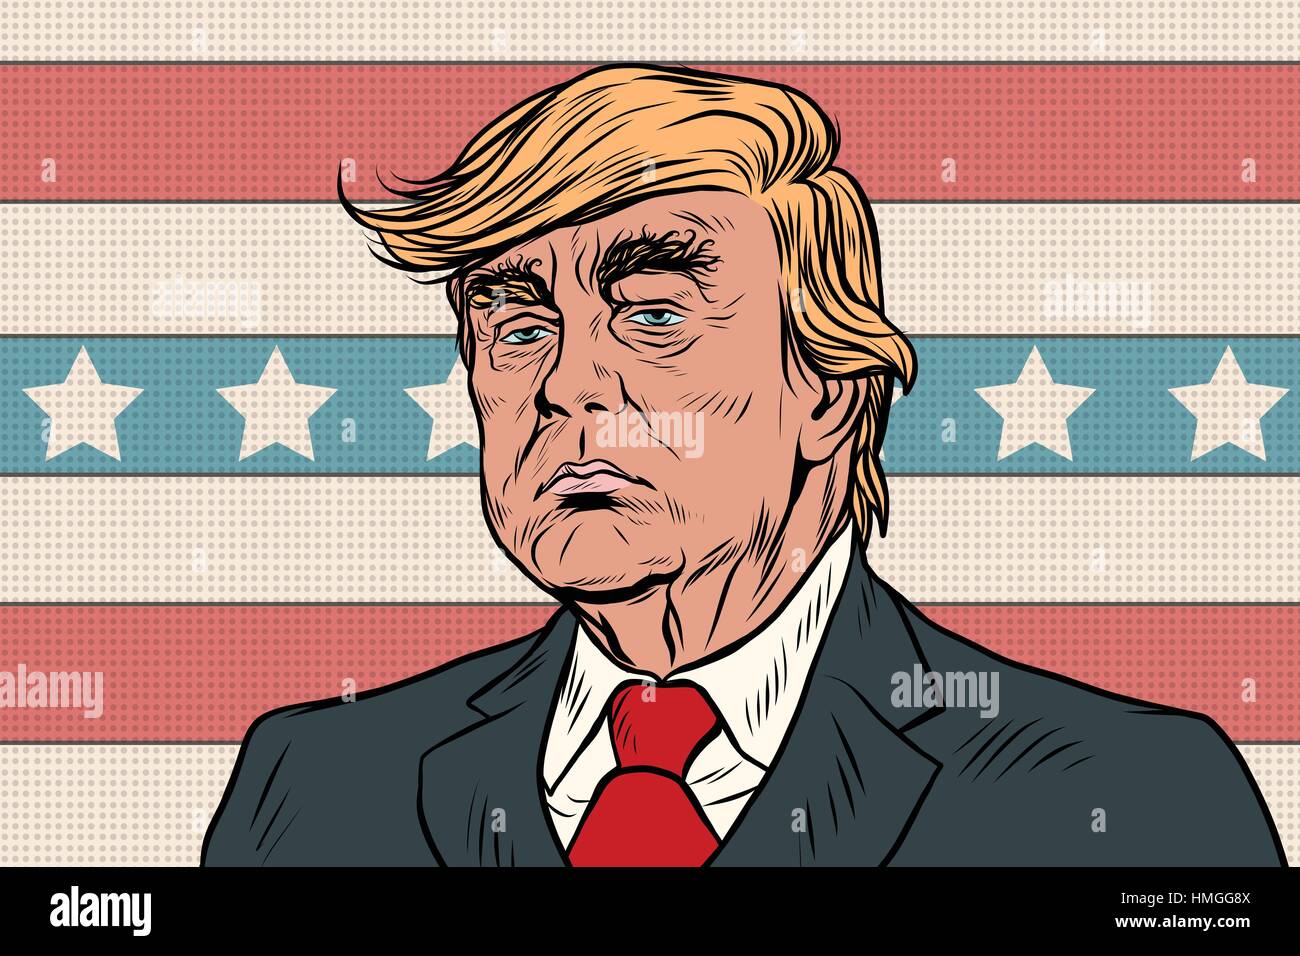 Donald Trump President of the United States cartoon pop art retr Stock Vector